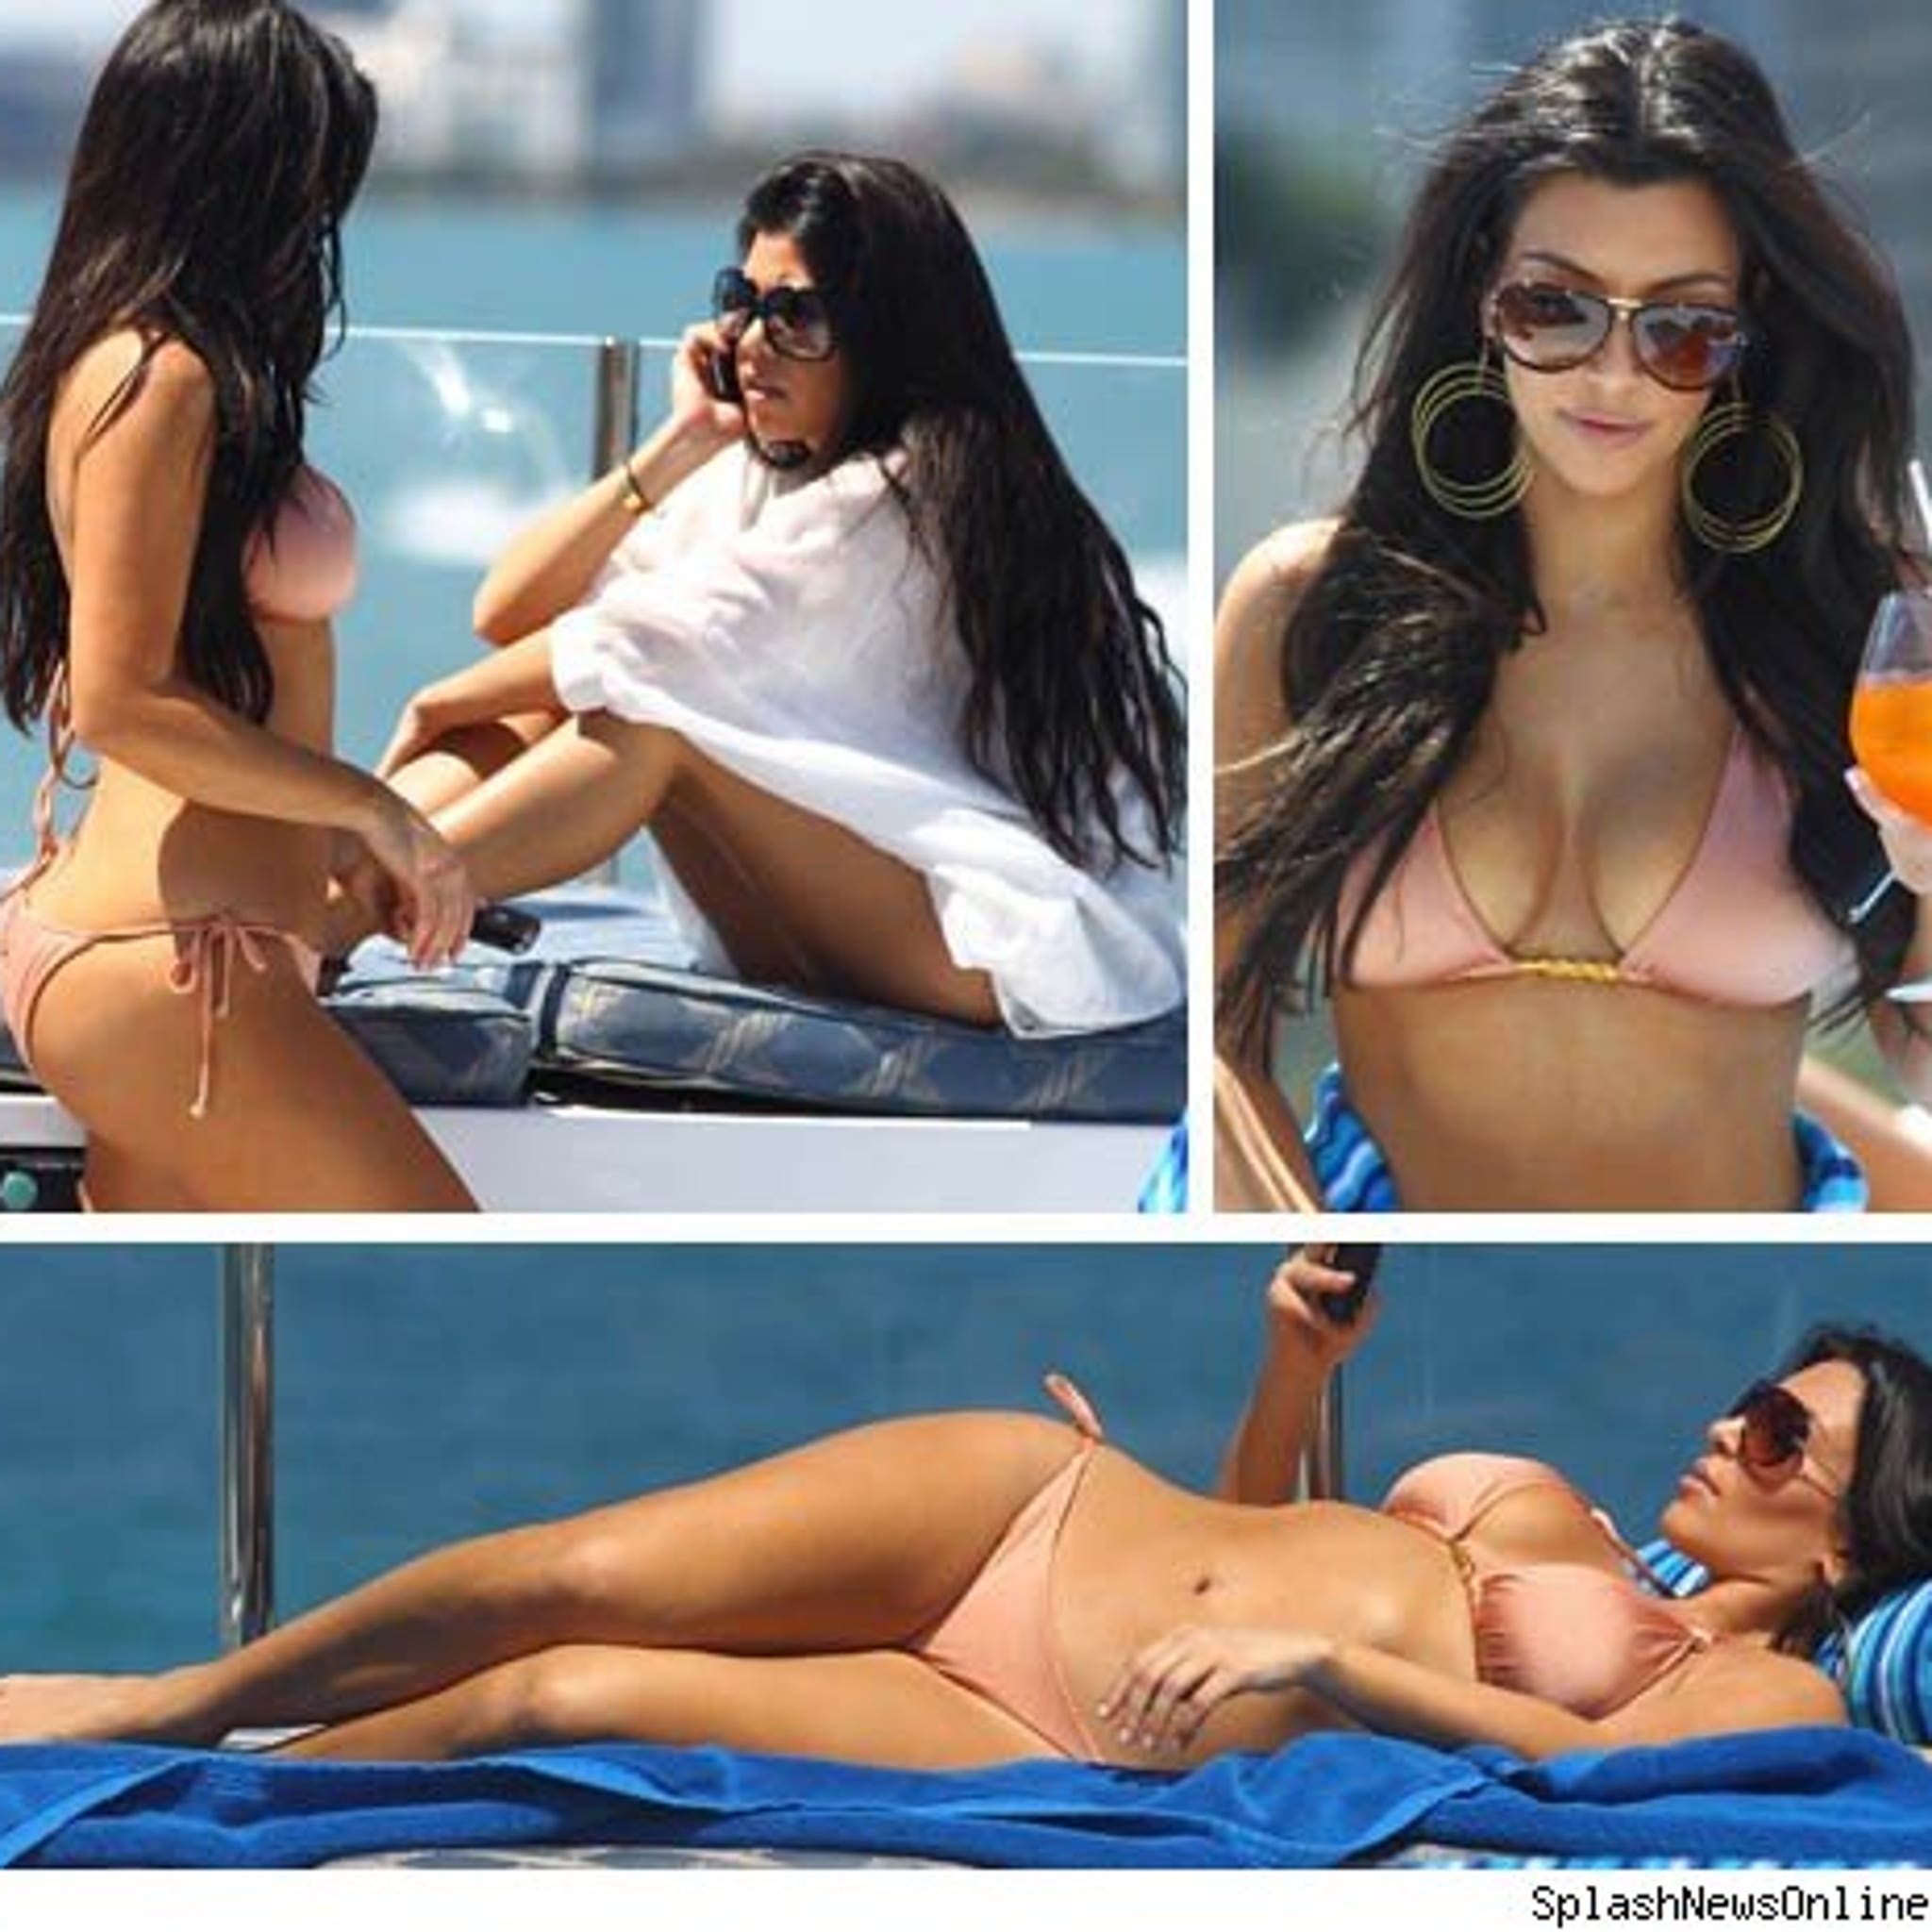 Kim Kardashian Goes Nude in Miami pic picture